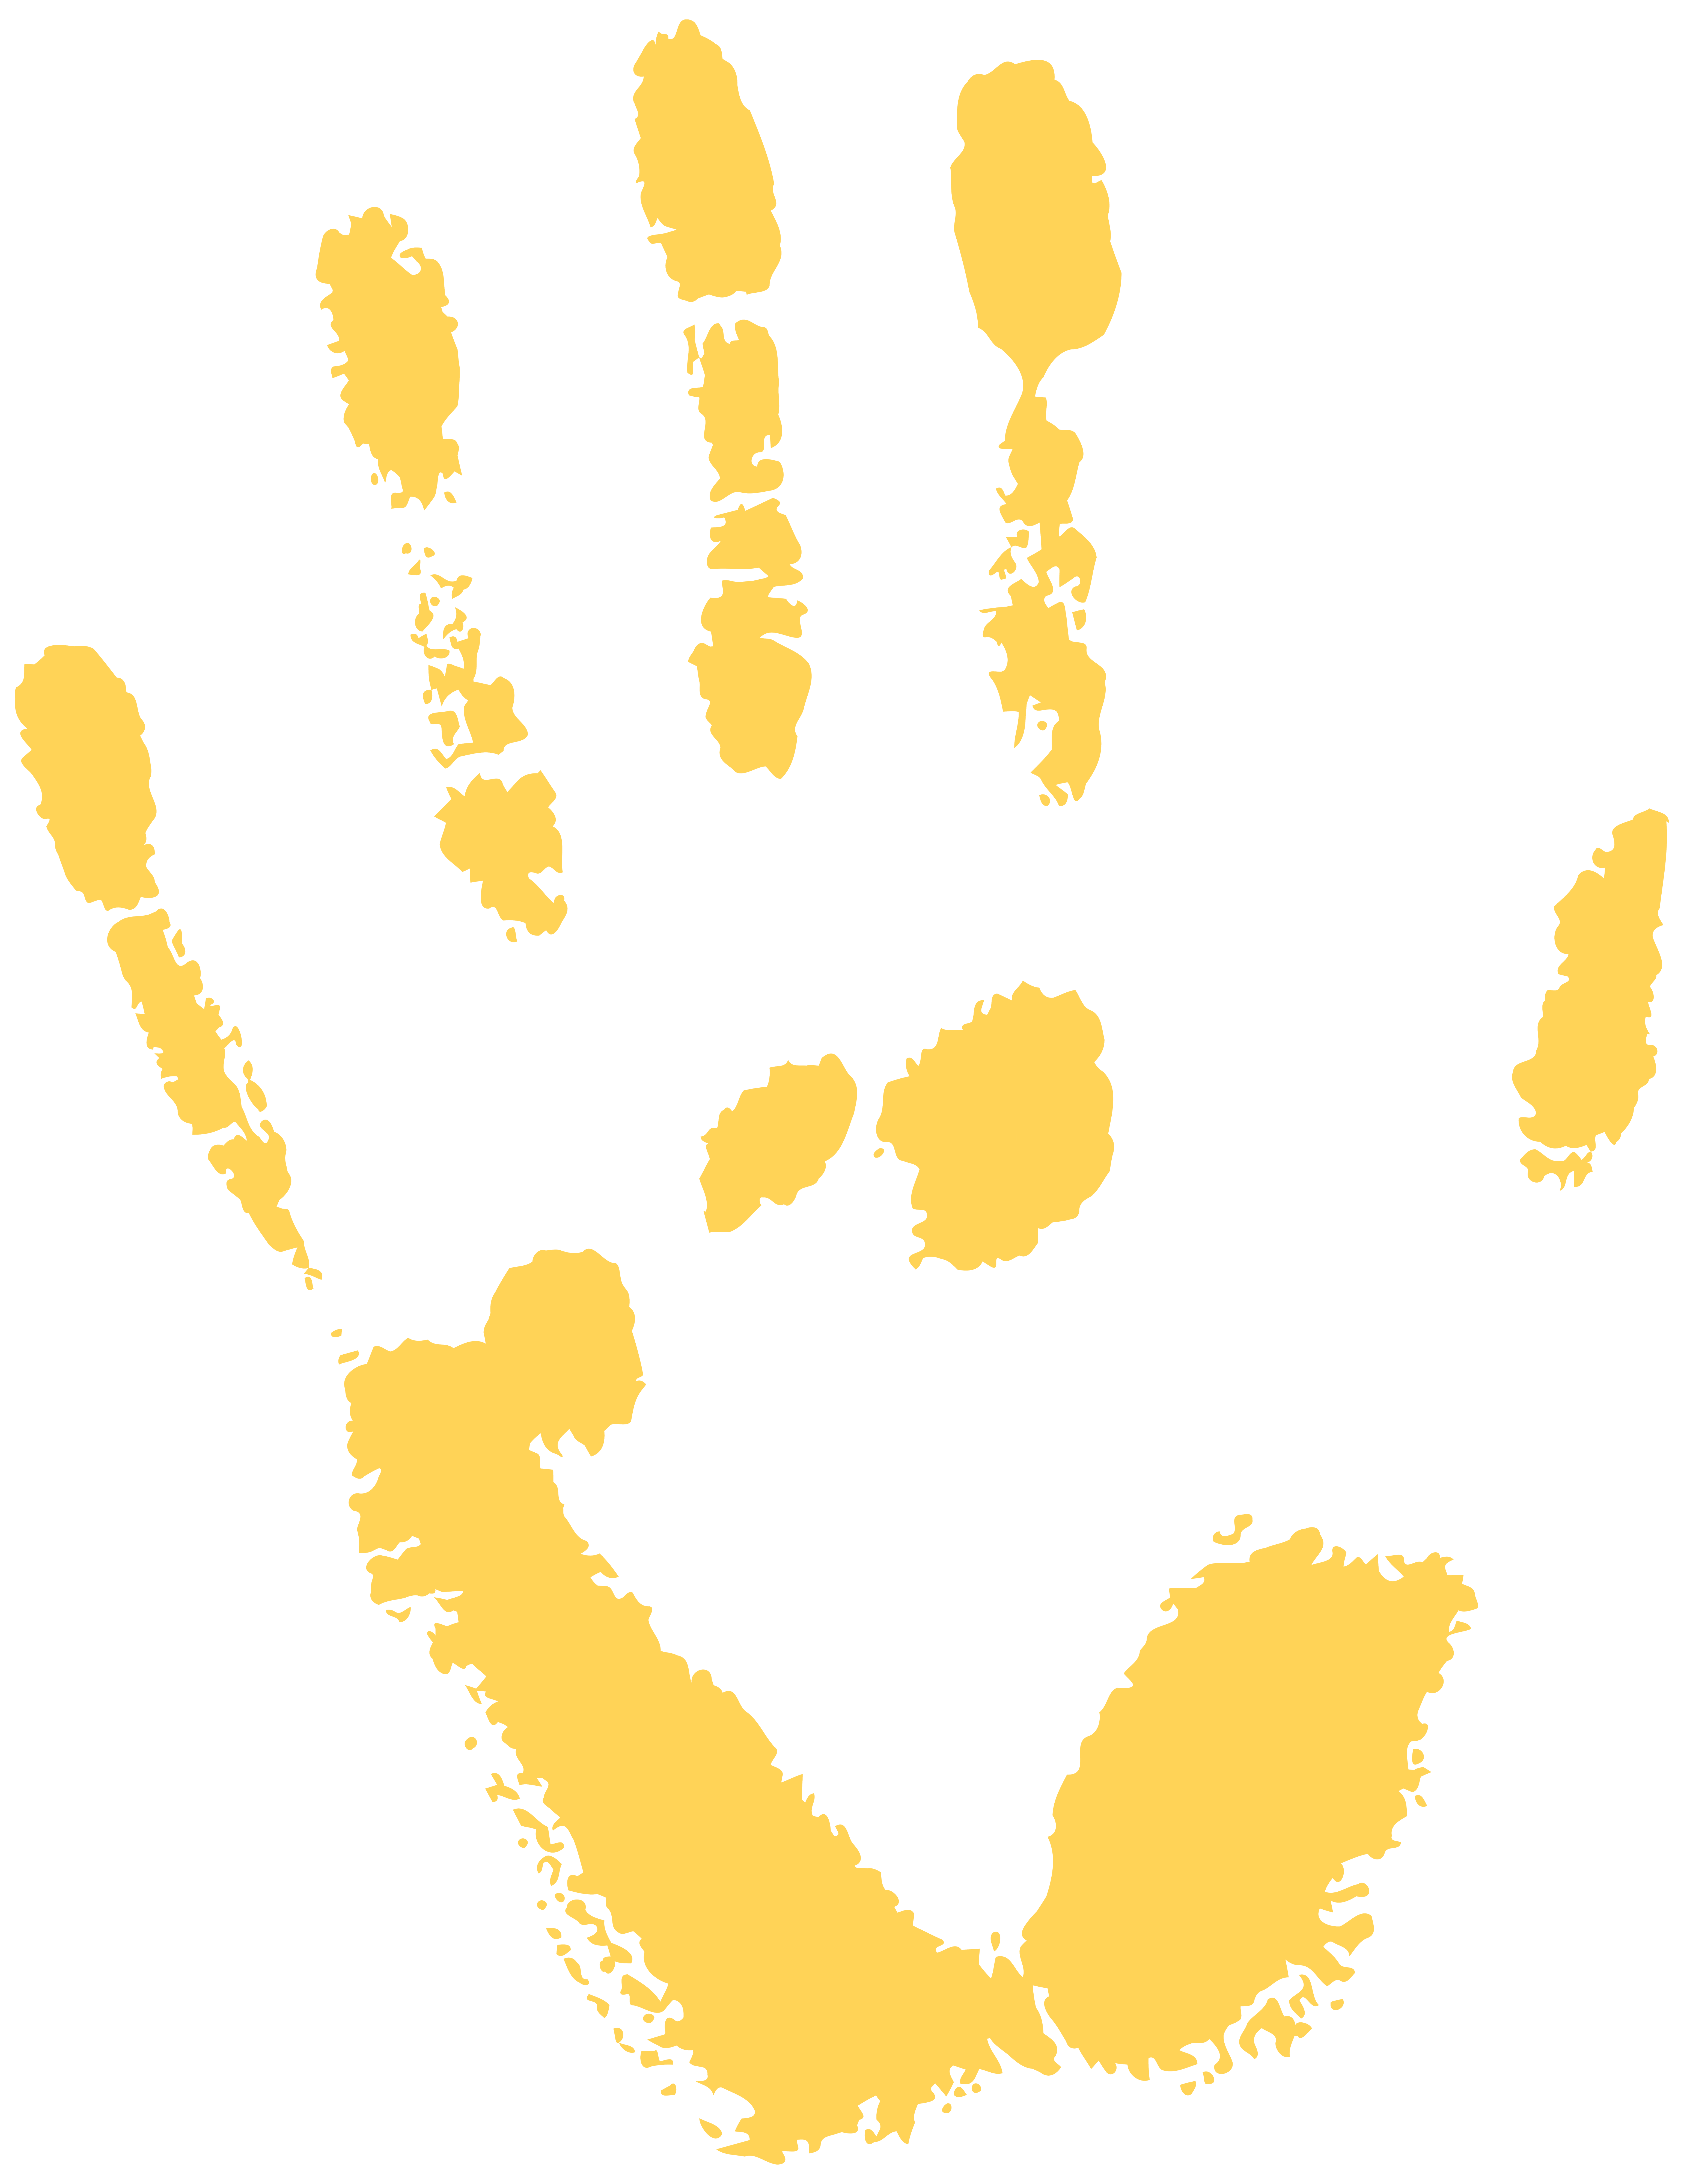 Yellow Handprint Free PNG Clip Art Image